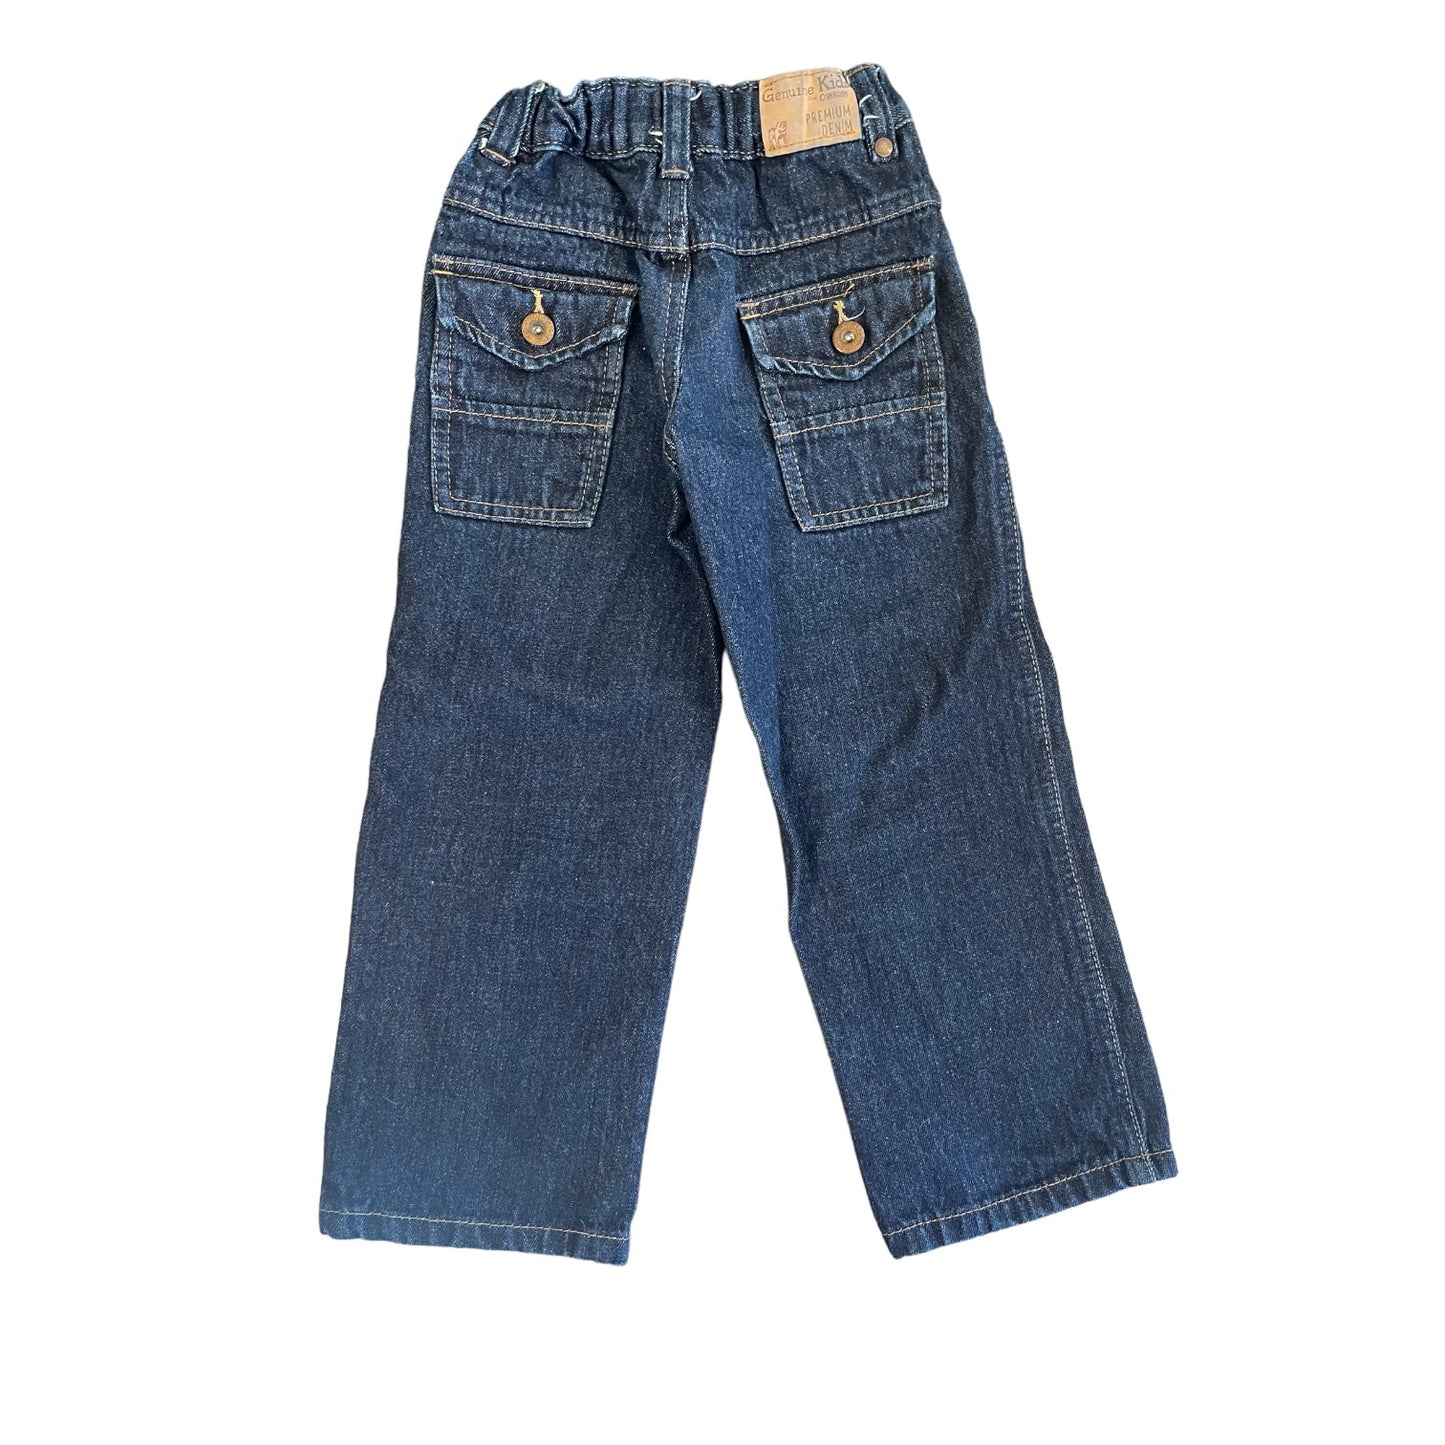 Oshkosh Boys Jeans Size 4T